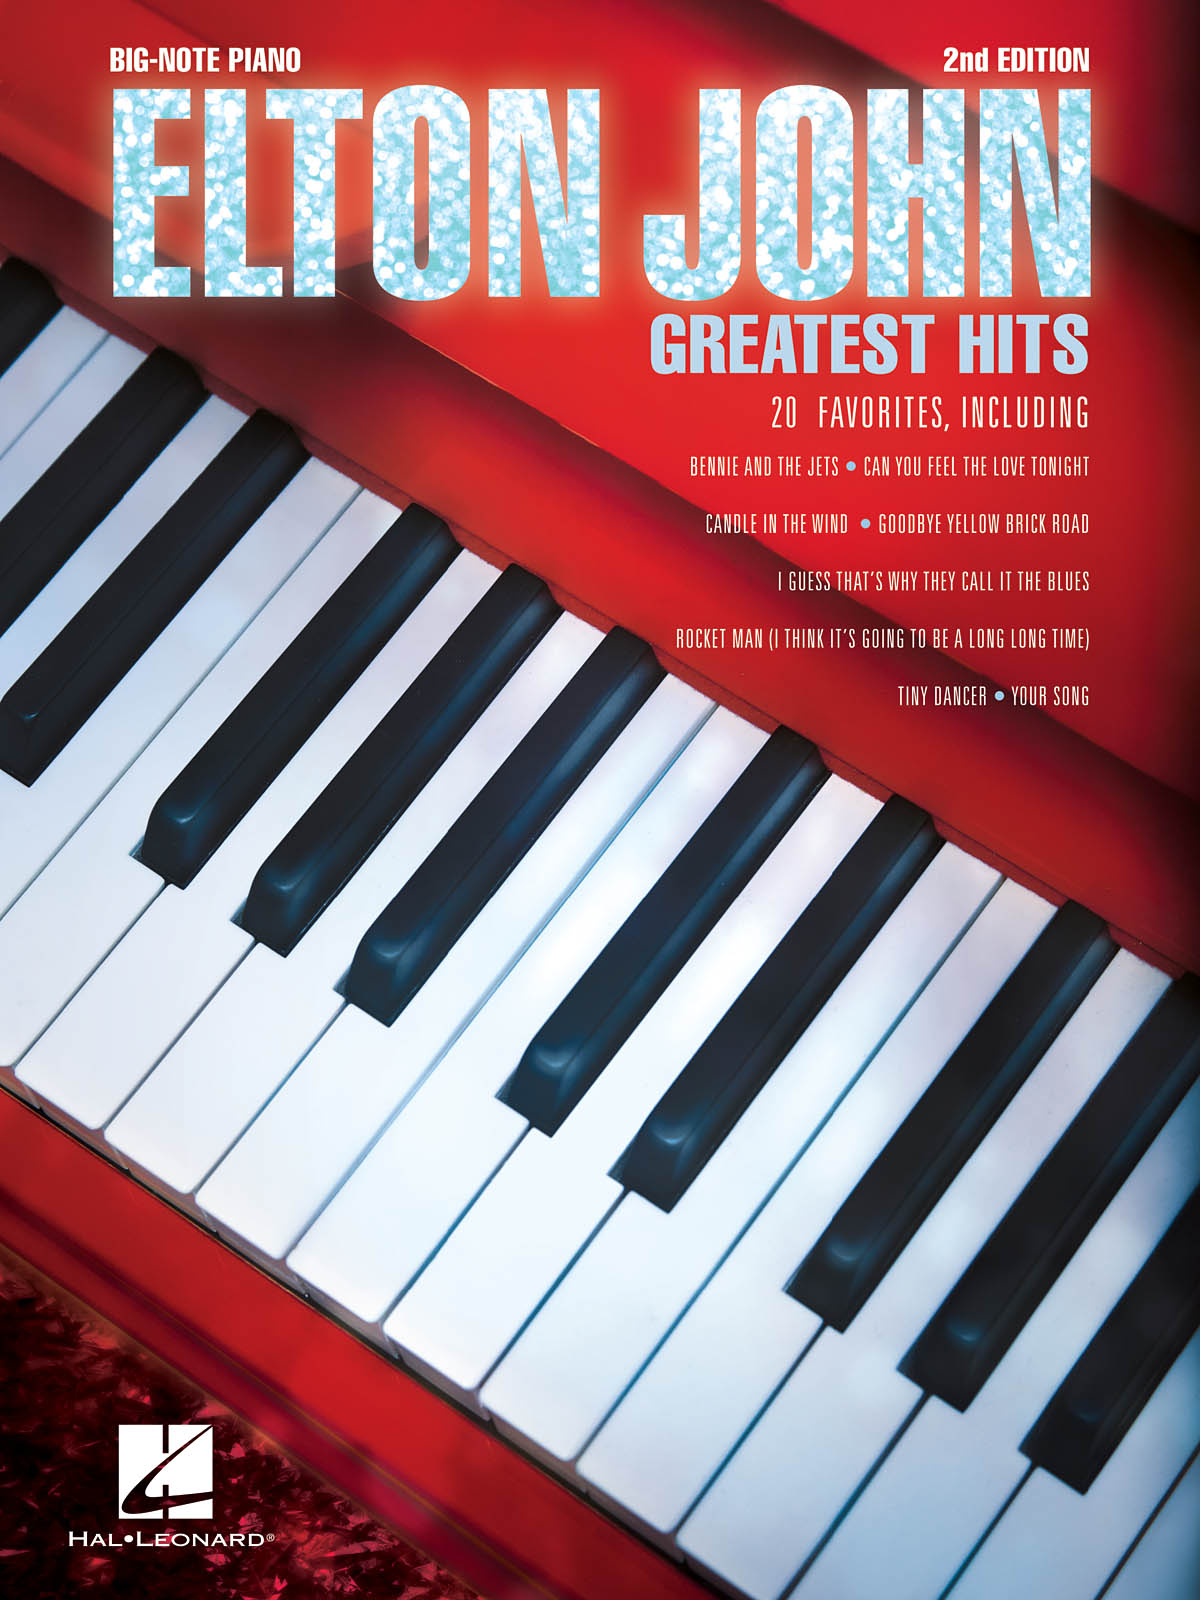 Elton John – Greatest Hits, 2nd Edition